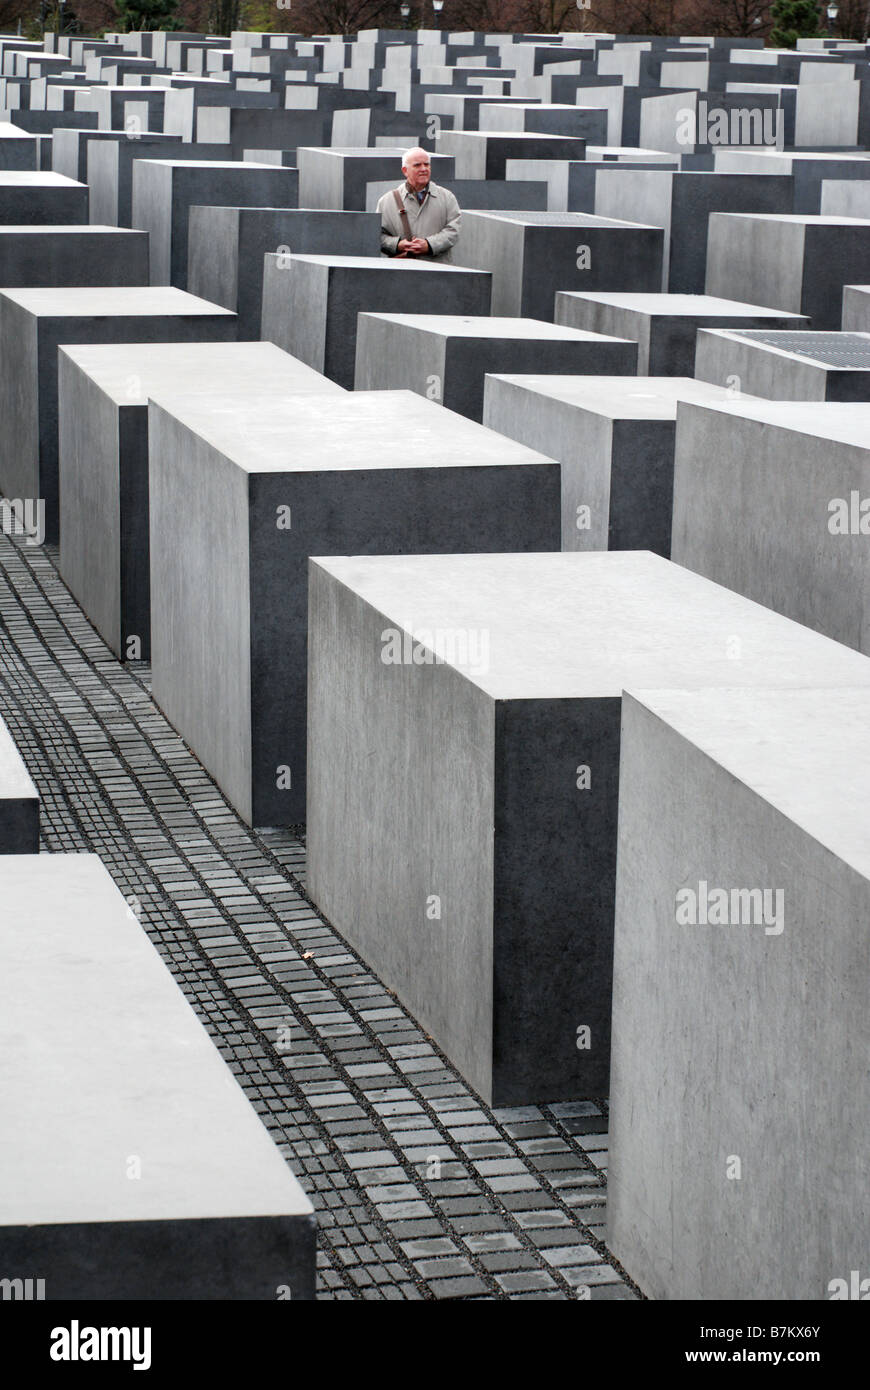 Man visiting the Holocaust Memorial in Berlin Stock Photo